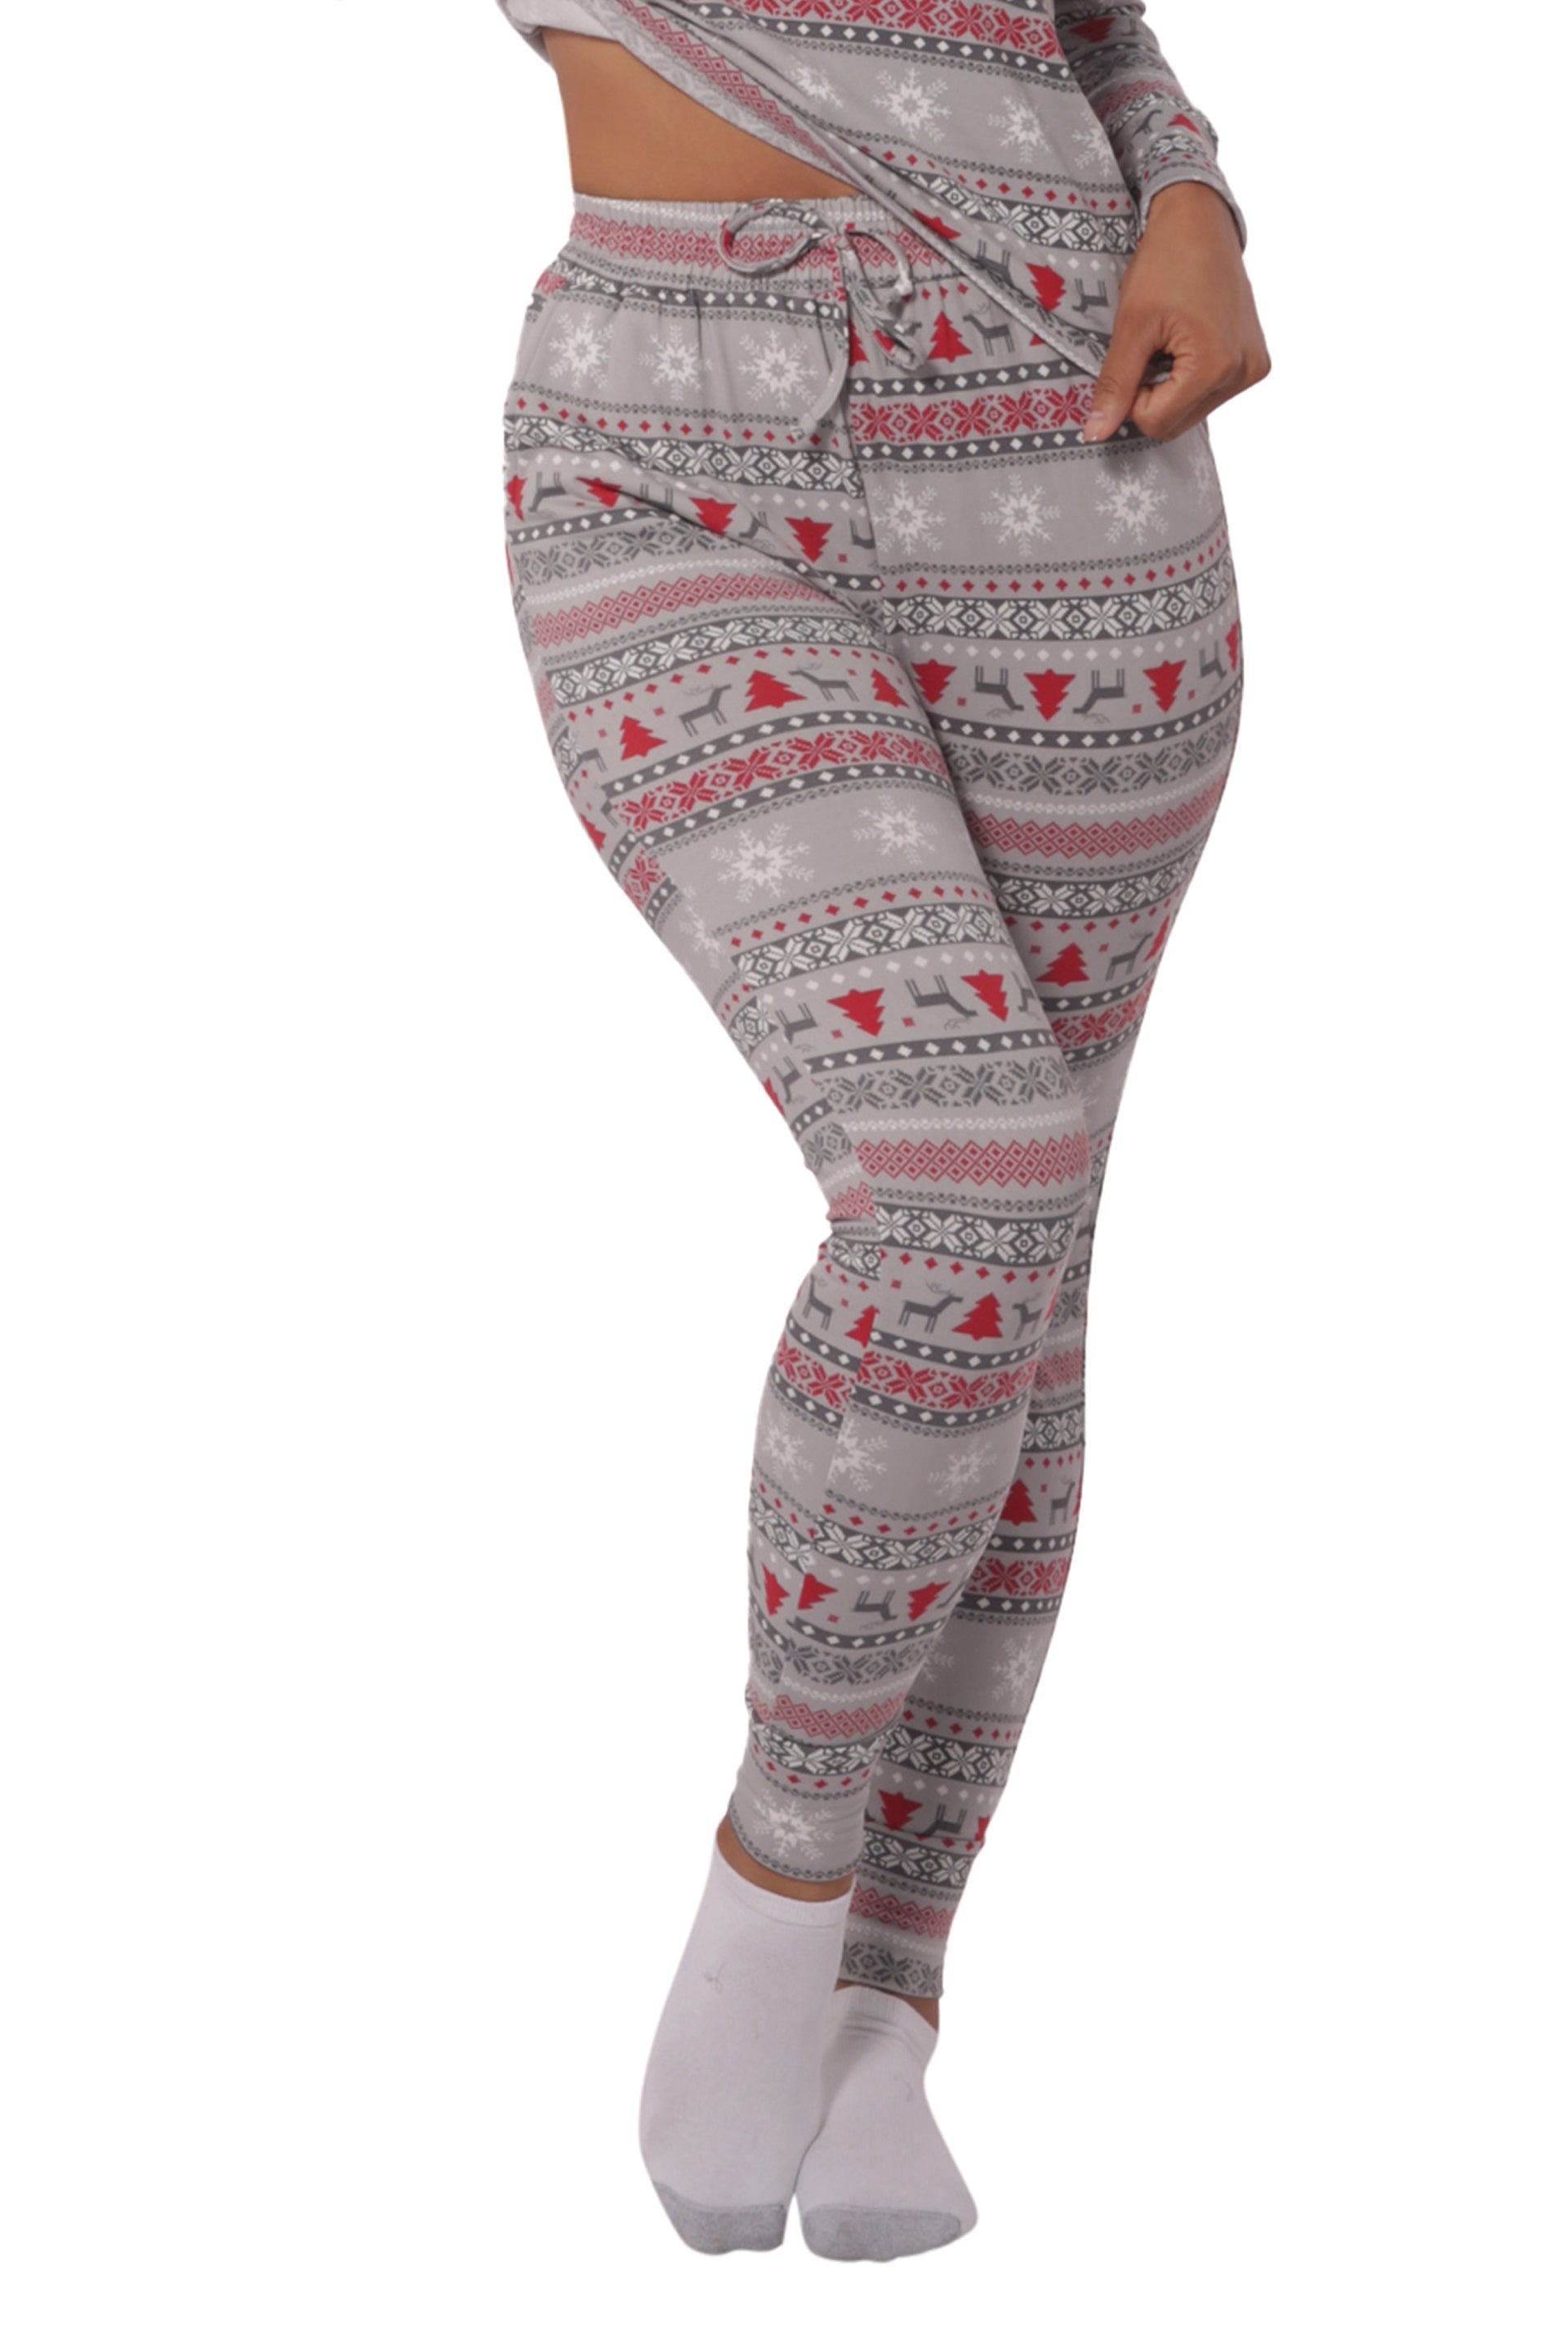 Wholesale Womens Holiday Print Fleece Lined Long Sleeve Top & Sweatpants Pajama Set - Gray, Red & White